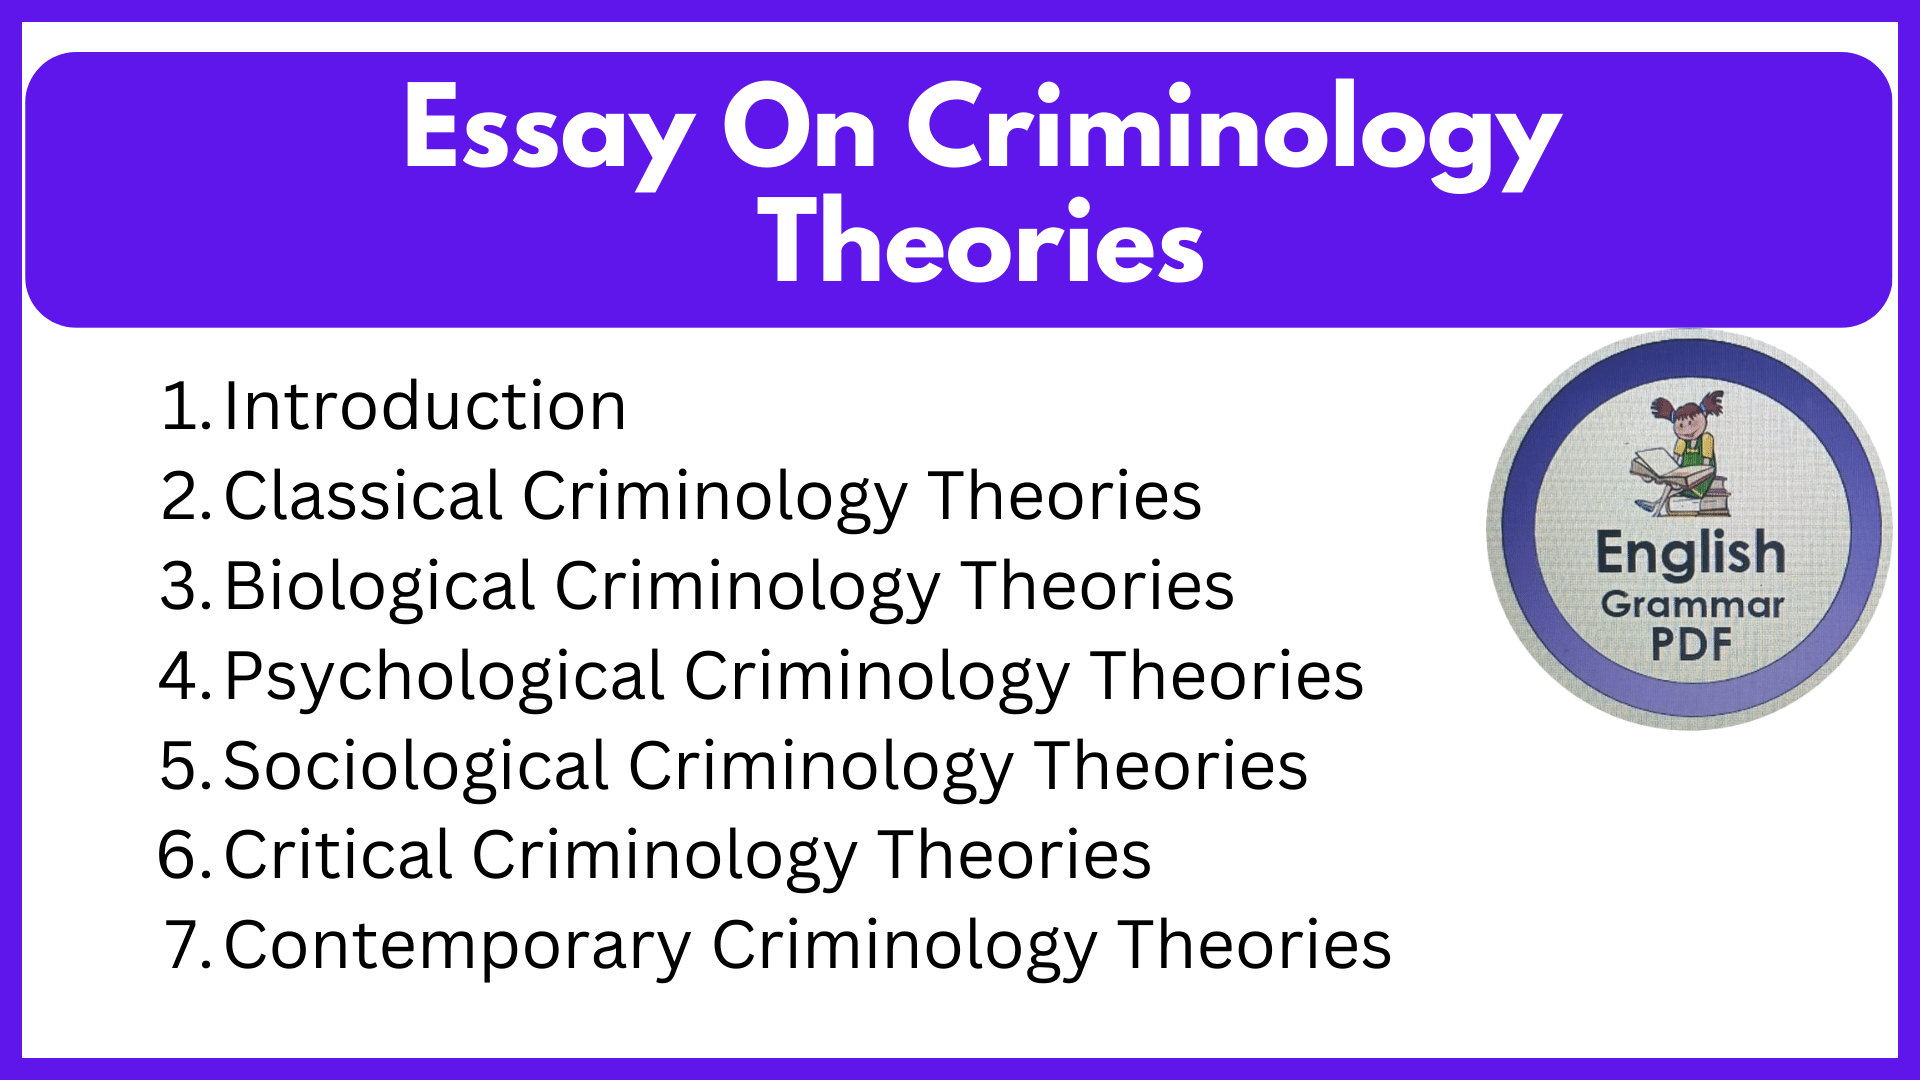 Essay On Criminology Theories